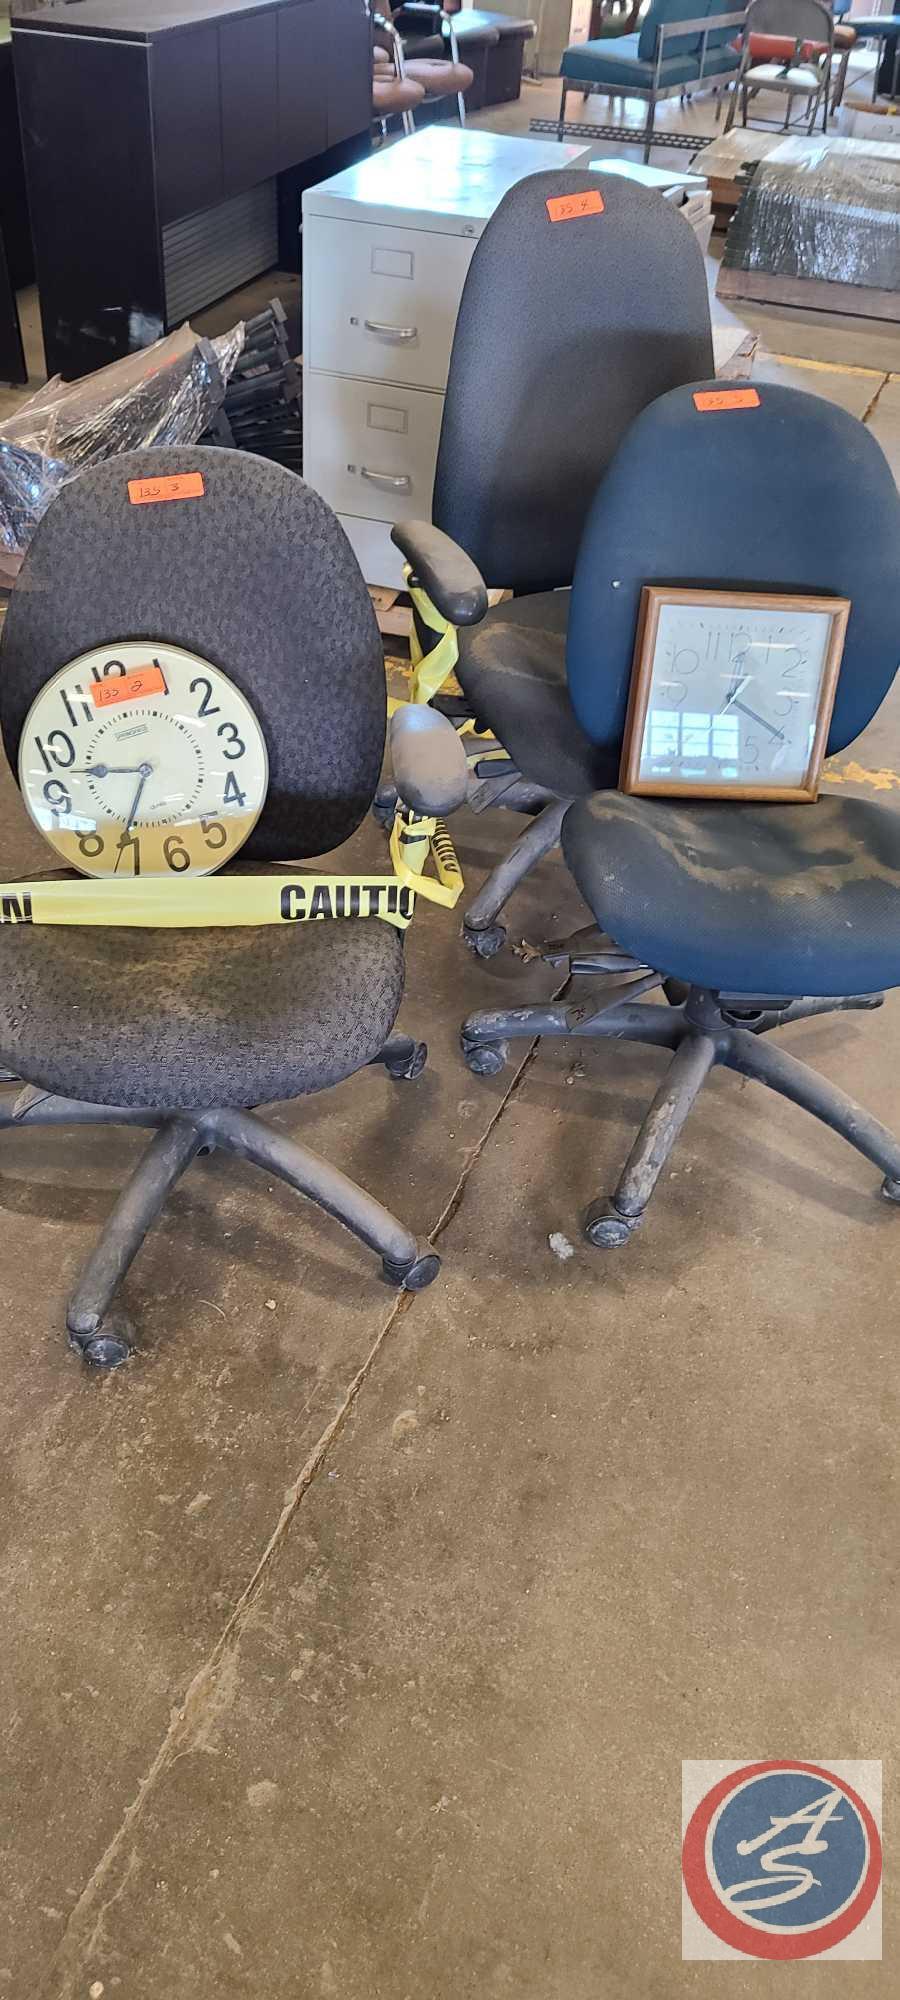 (3) Office Chairs, (2) Wall Clocks.